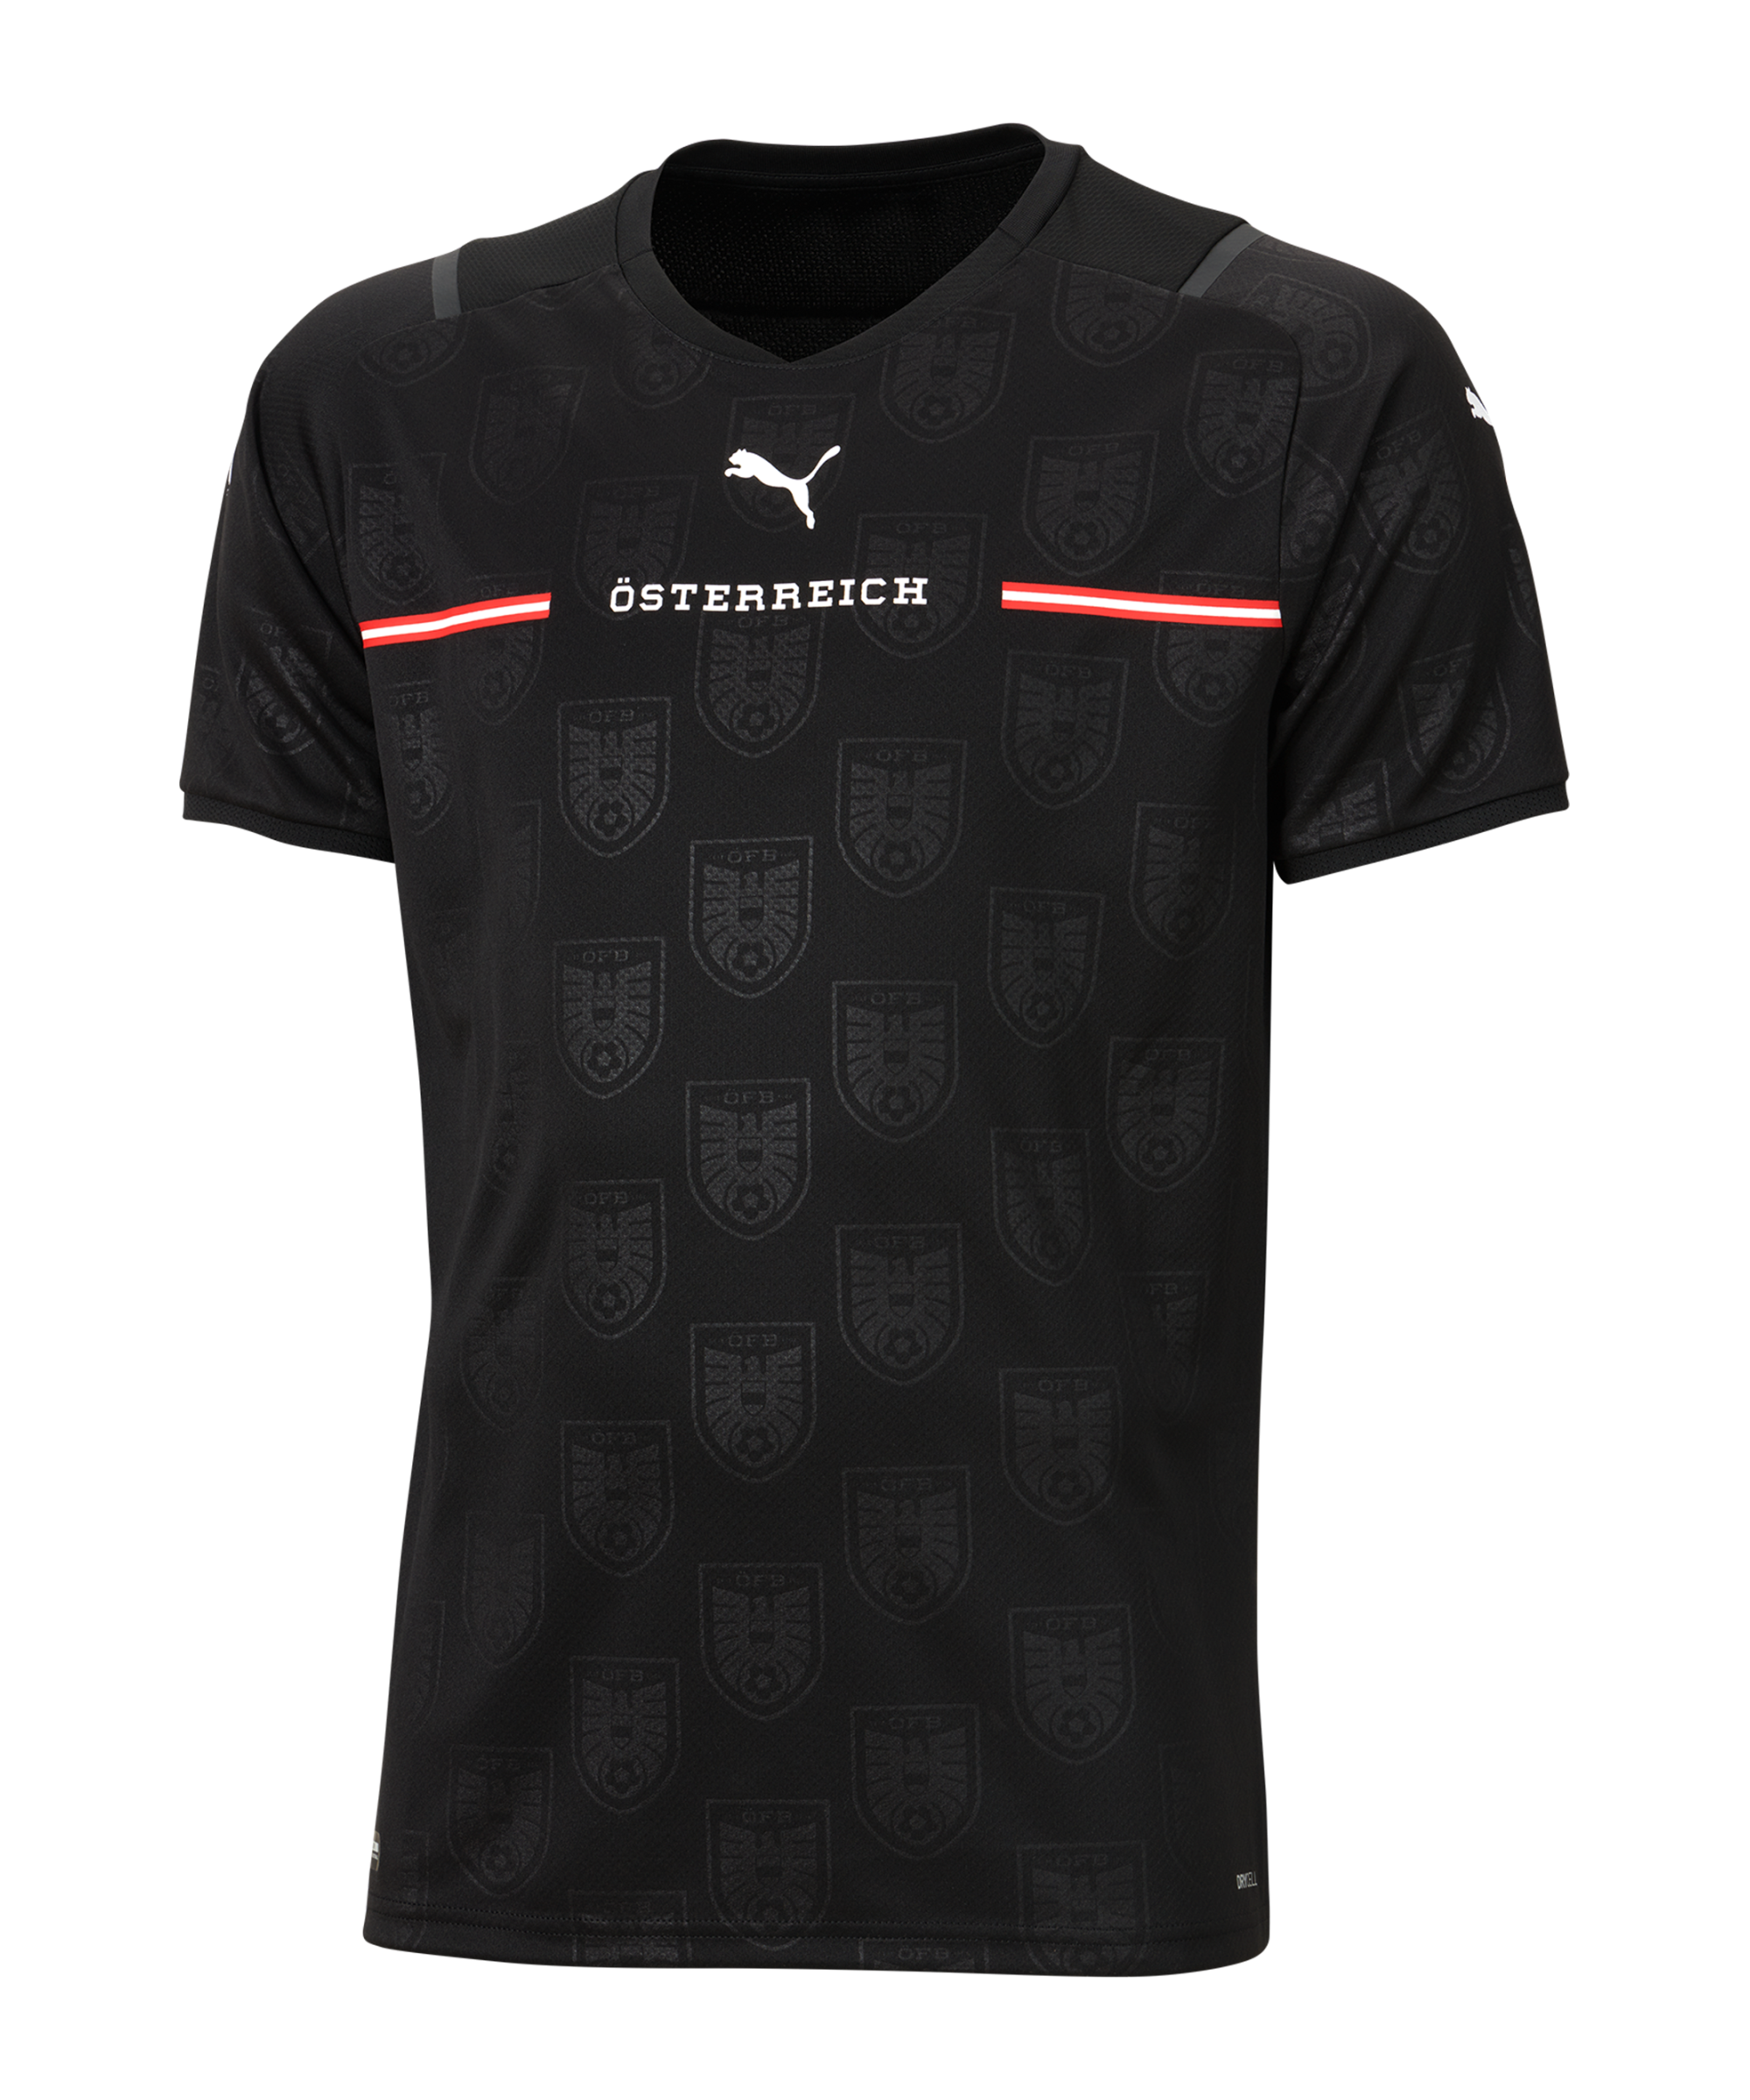 Pánský fotbalový dres s krátkým rukávem Puma Rakousko Venkovní 2020/21